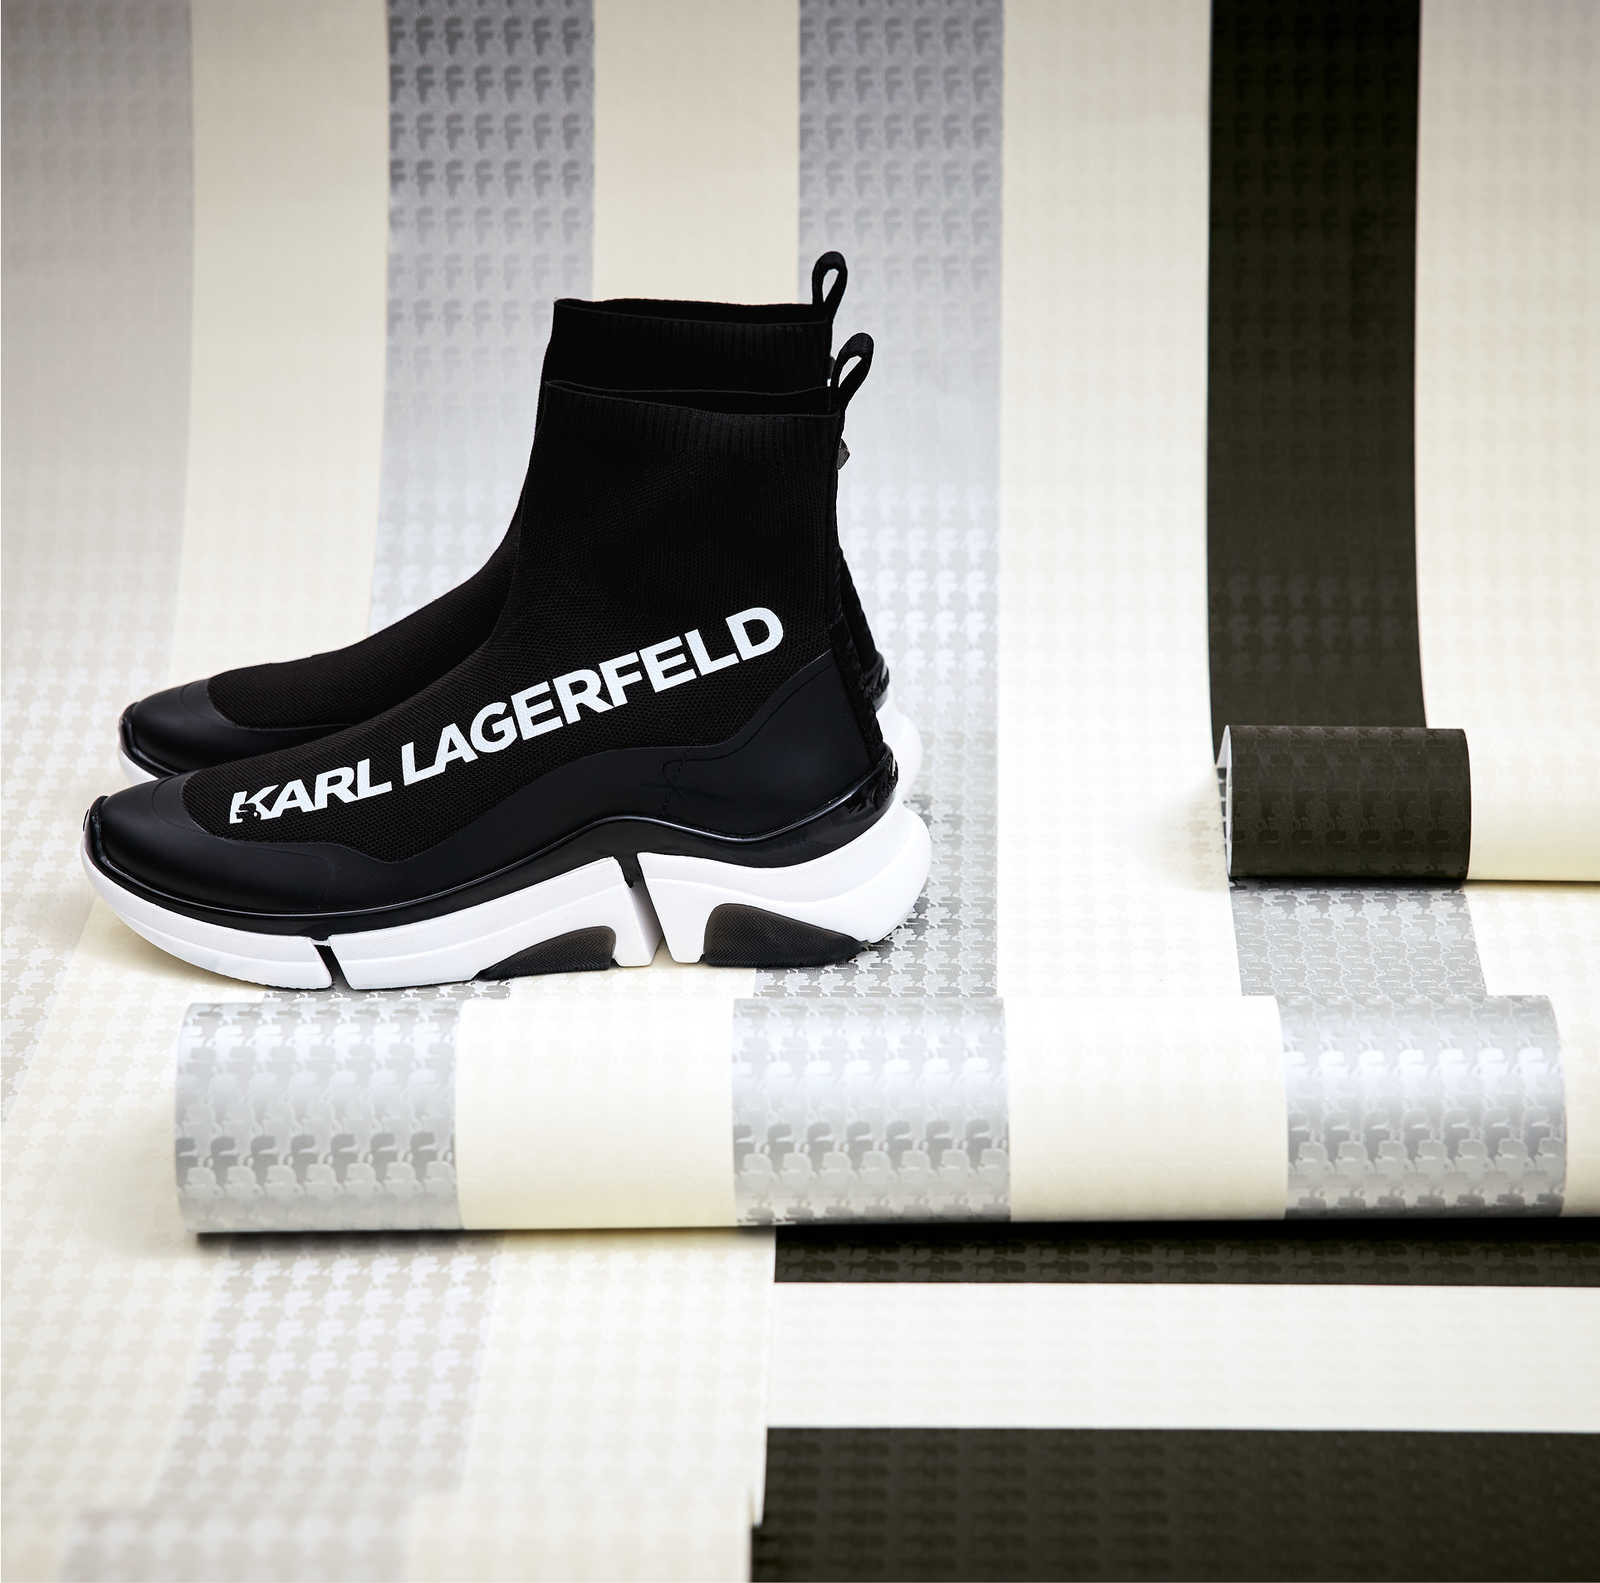             Wallpaper Karl LAGERFELD stripes & texture pattern - black, white
        